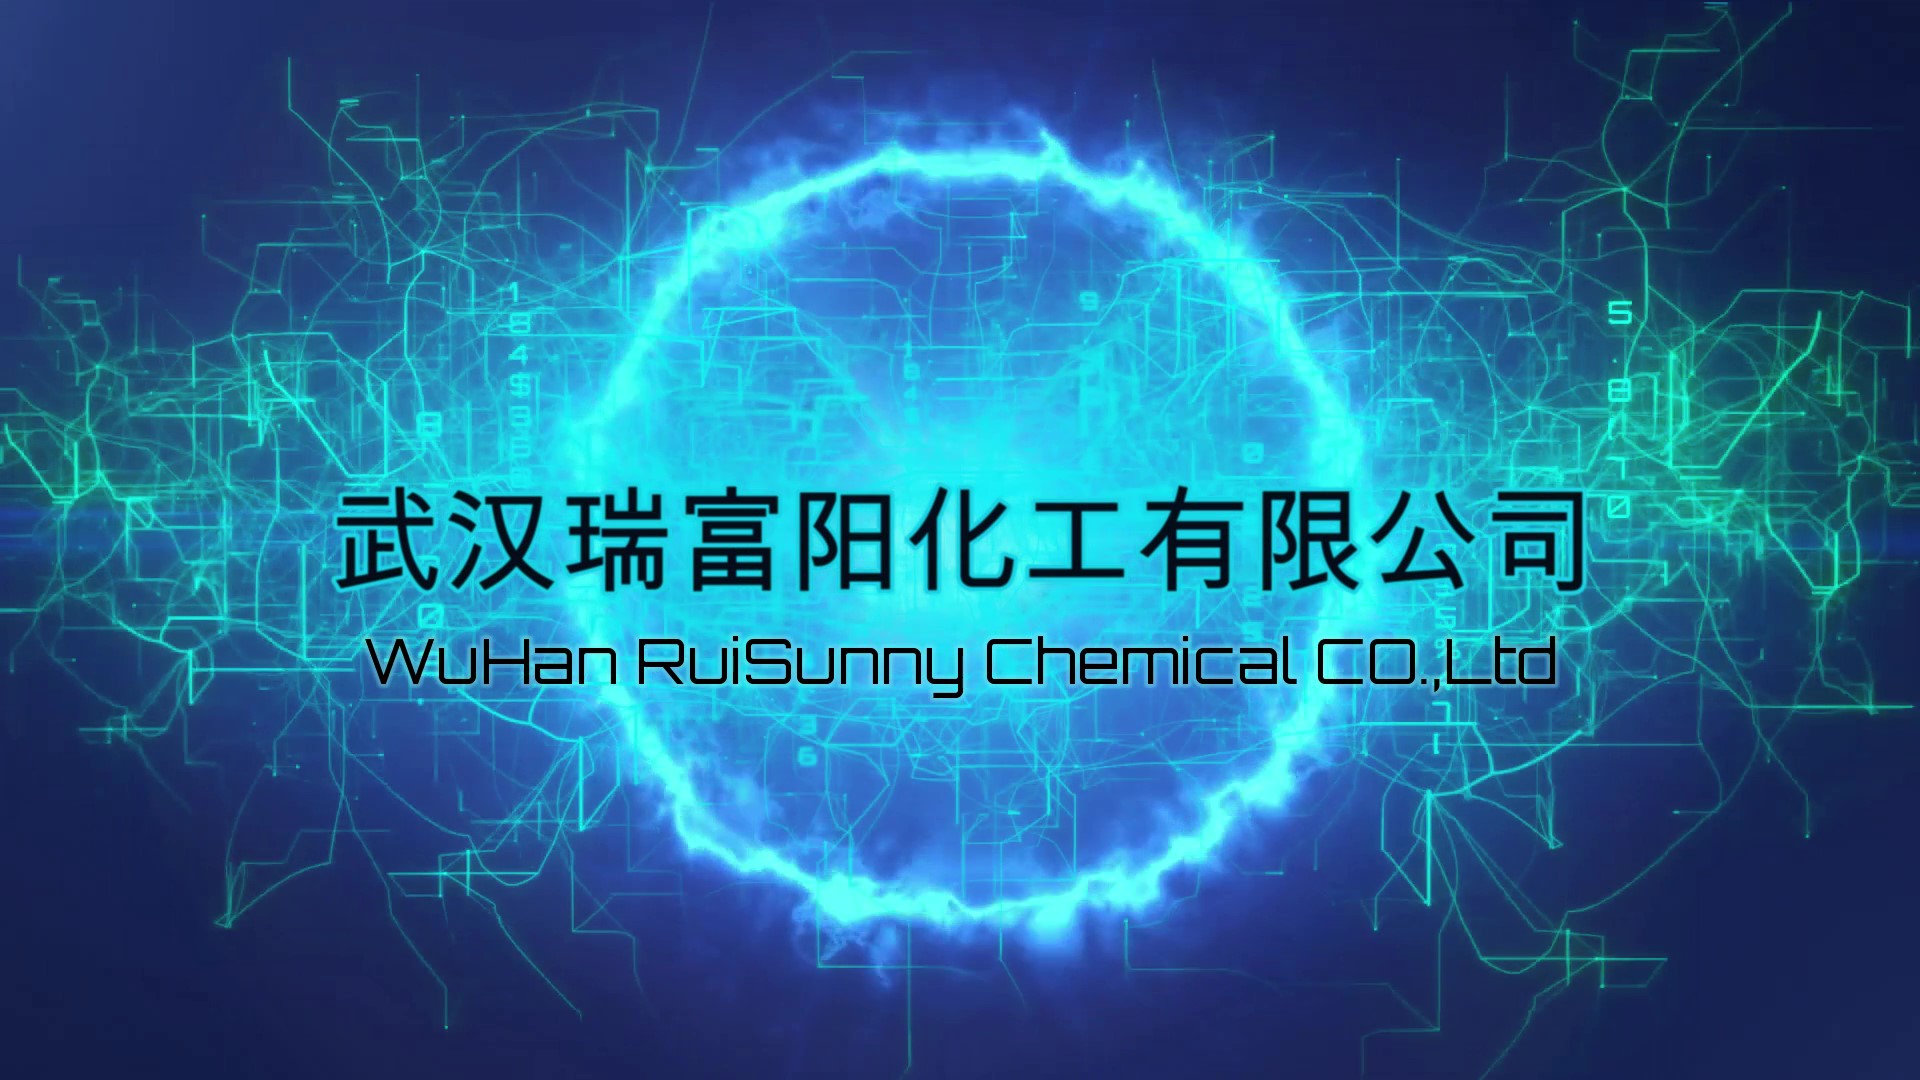 Wuhan Rui Sunny Chemical Co., Ltd